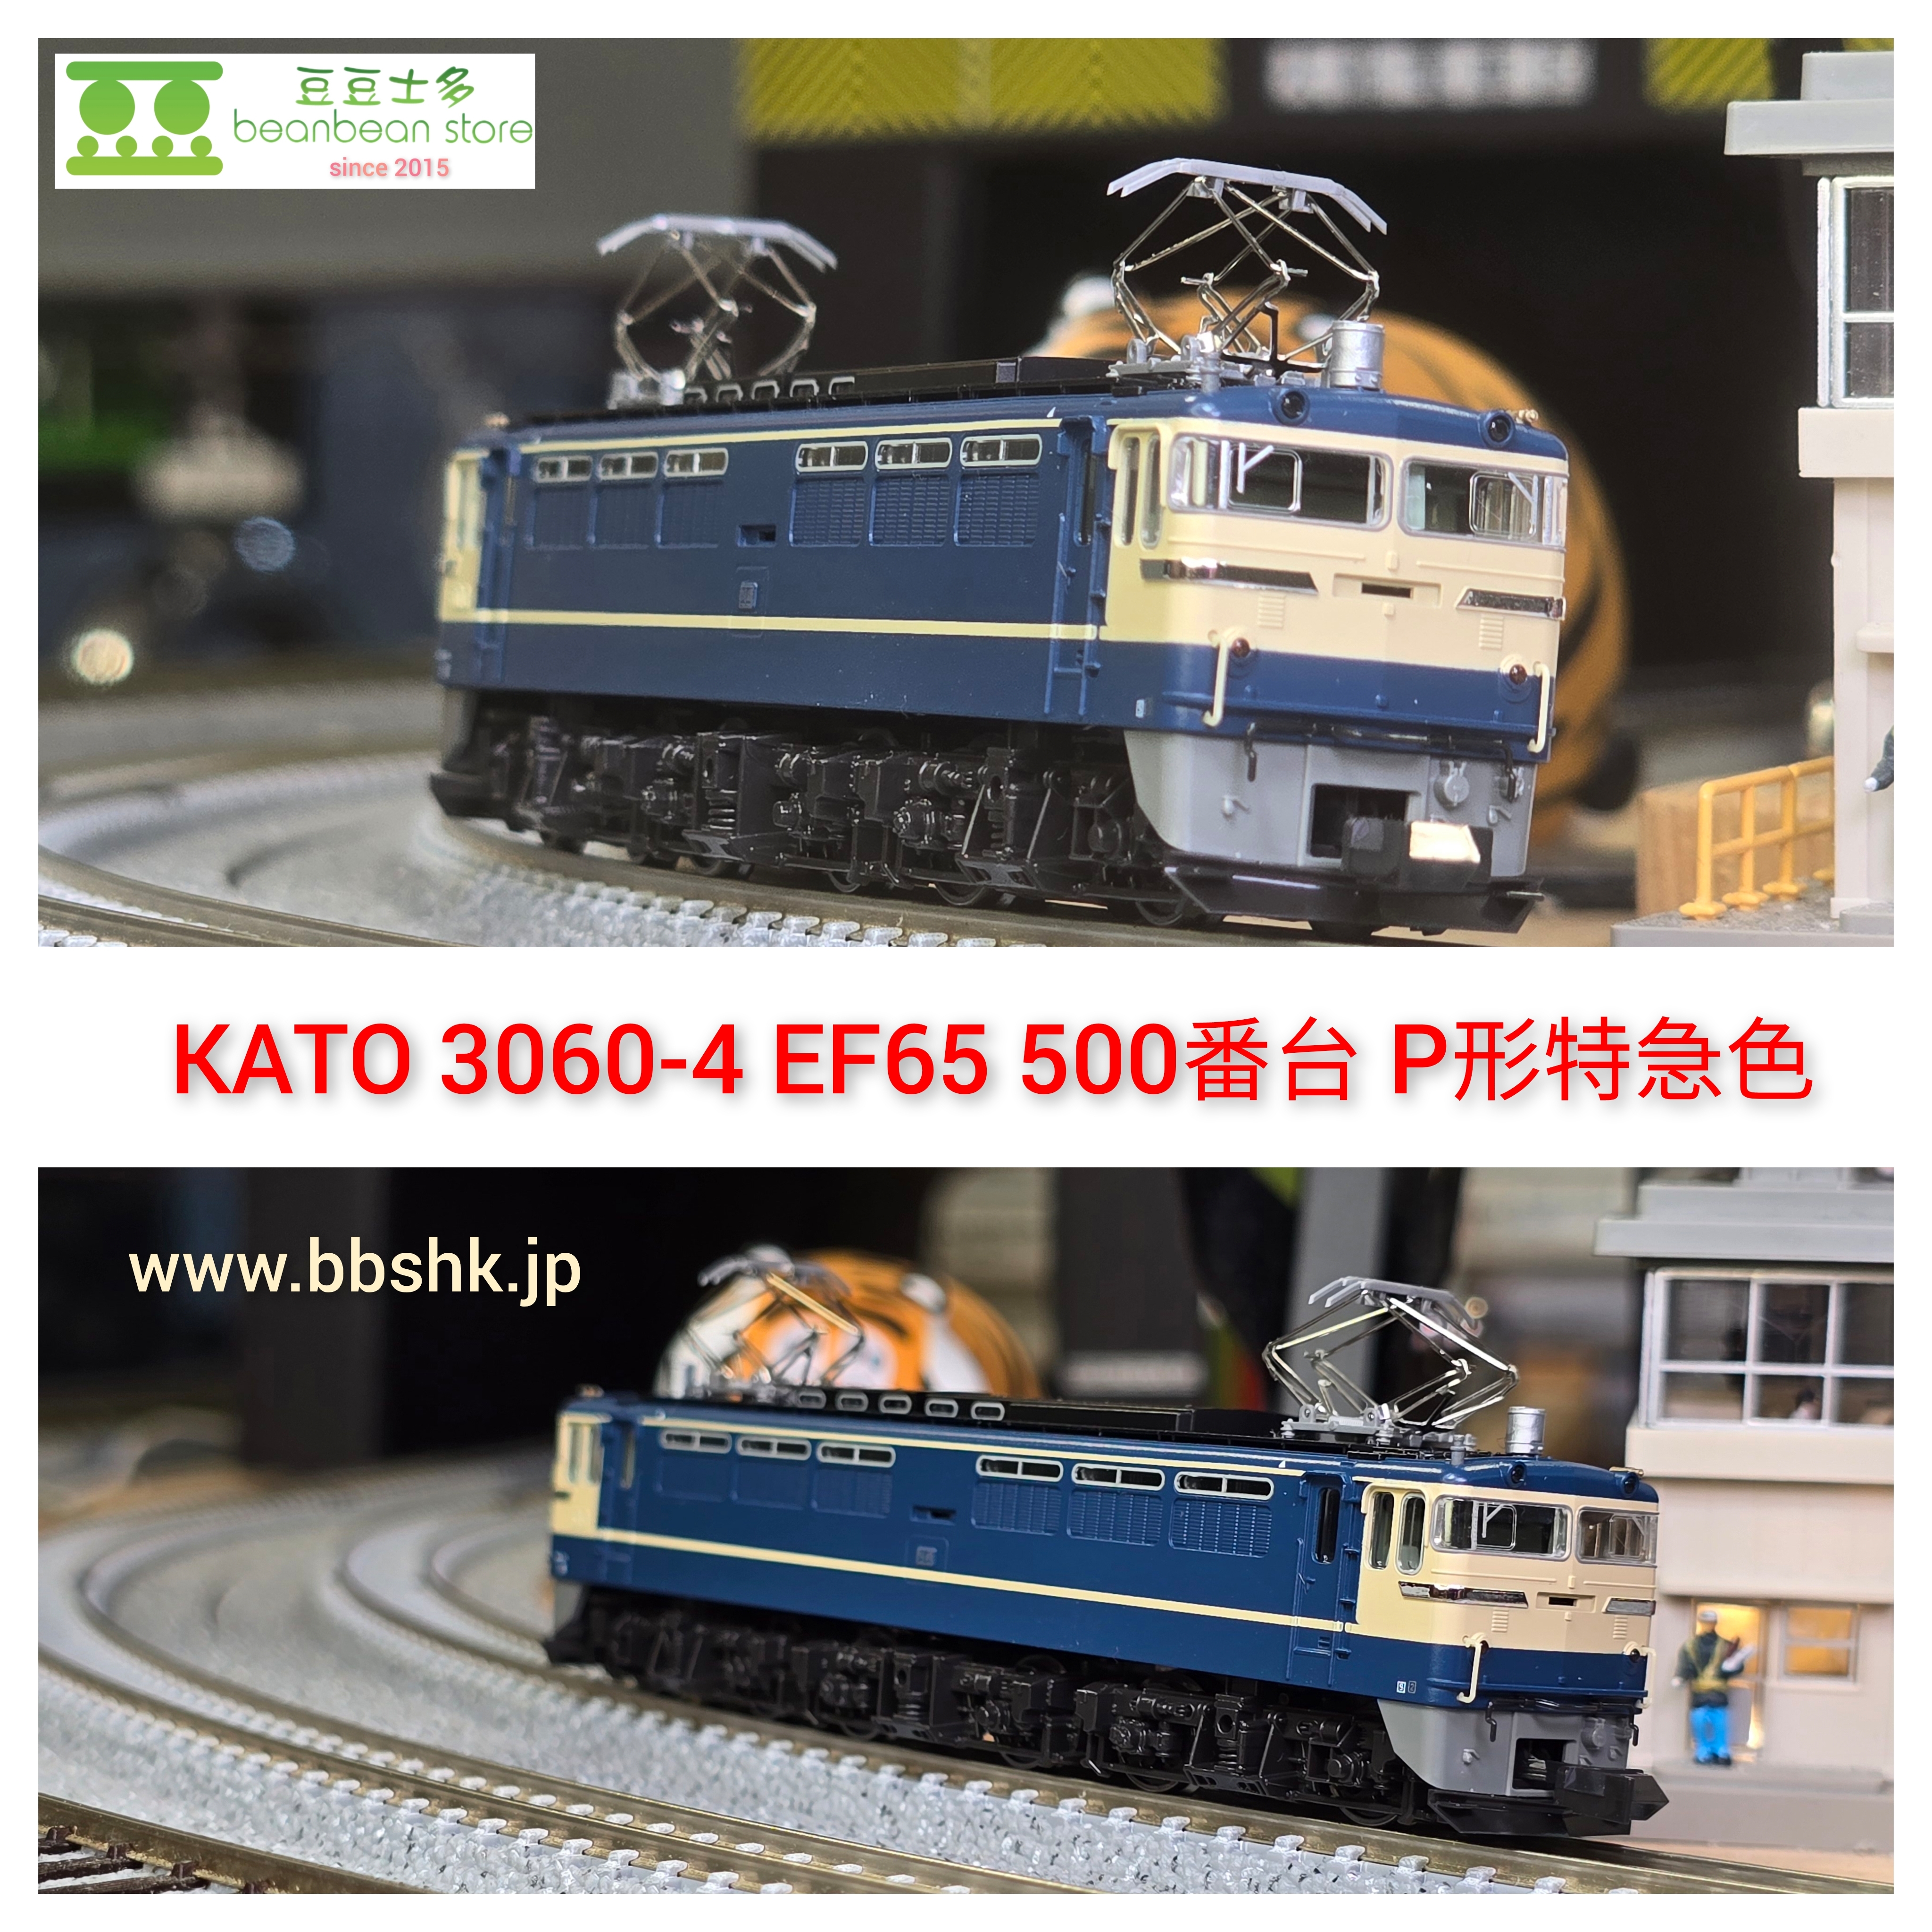 KATO 3060 EF65 500番台P形特急色